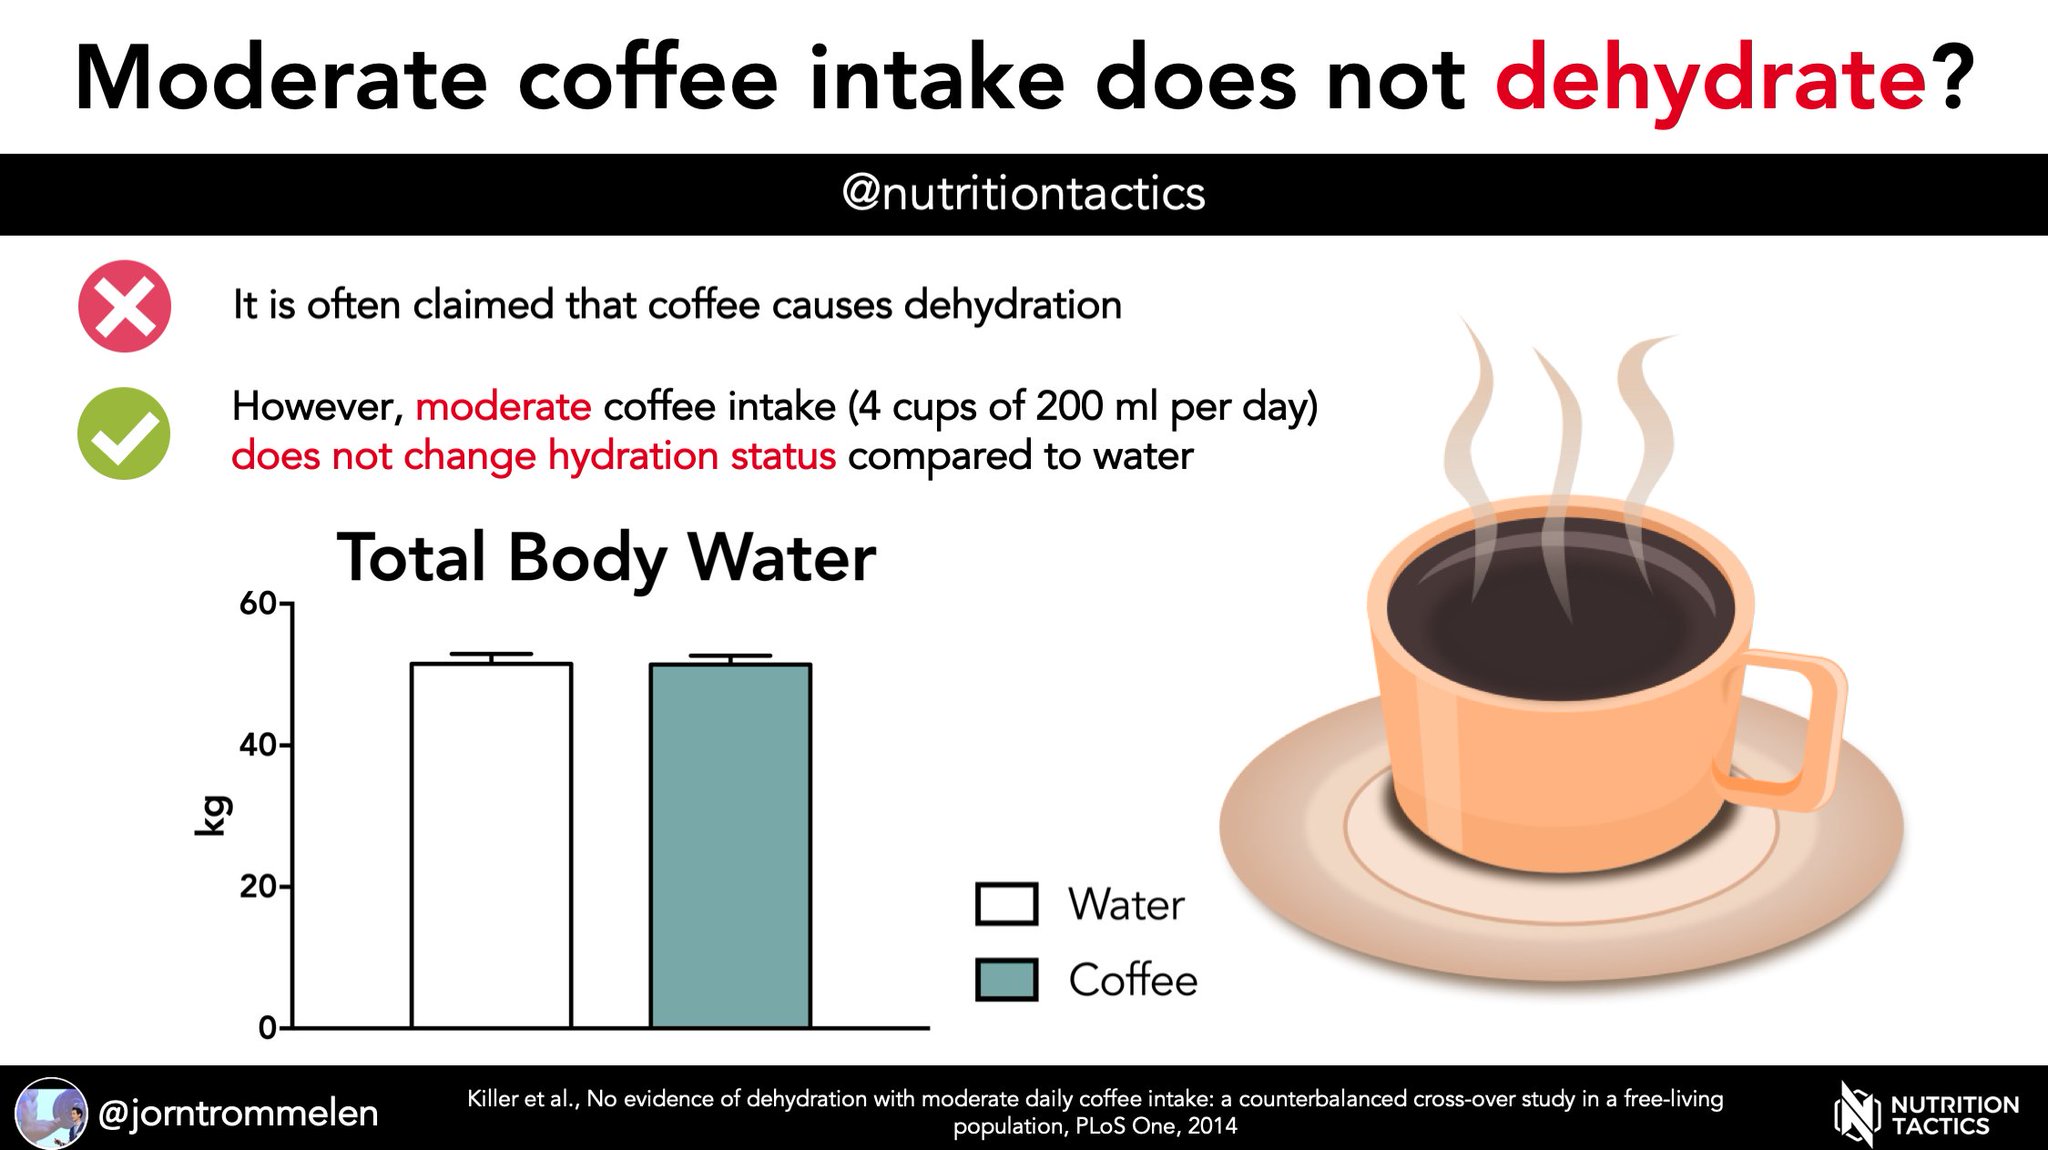 تويتر \ Jorn Trommelen, PhD على "Moderate coffee intake does dehydrate? 4 cups of 200 per day does change total body water compared to water during a 3